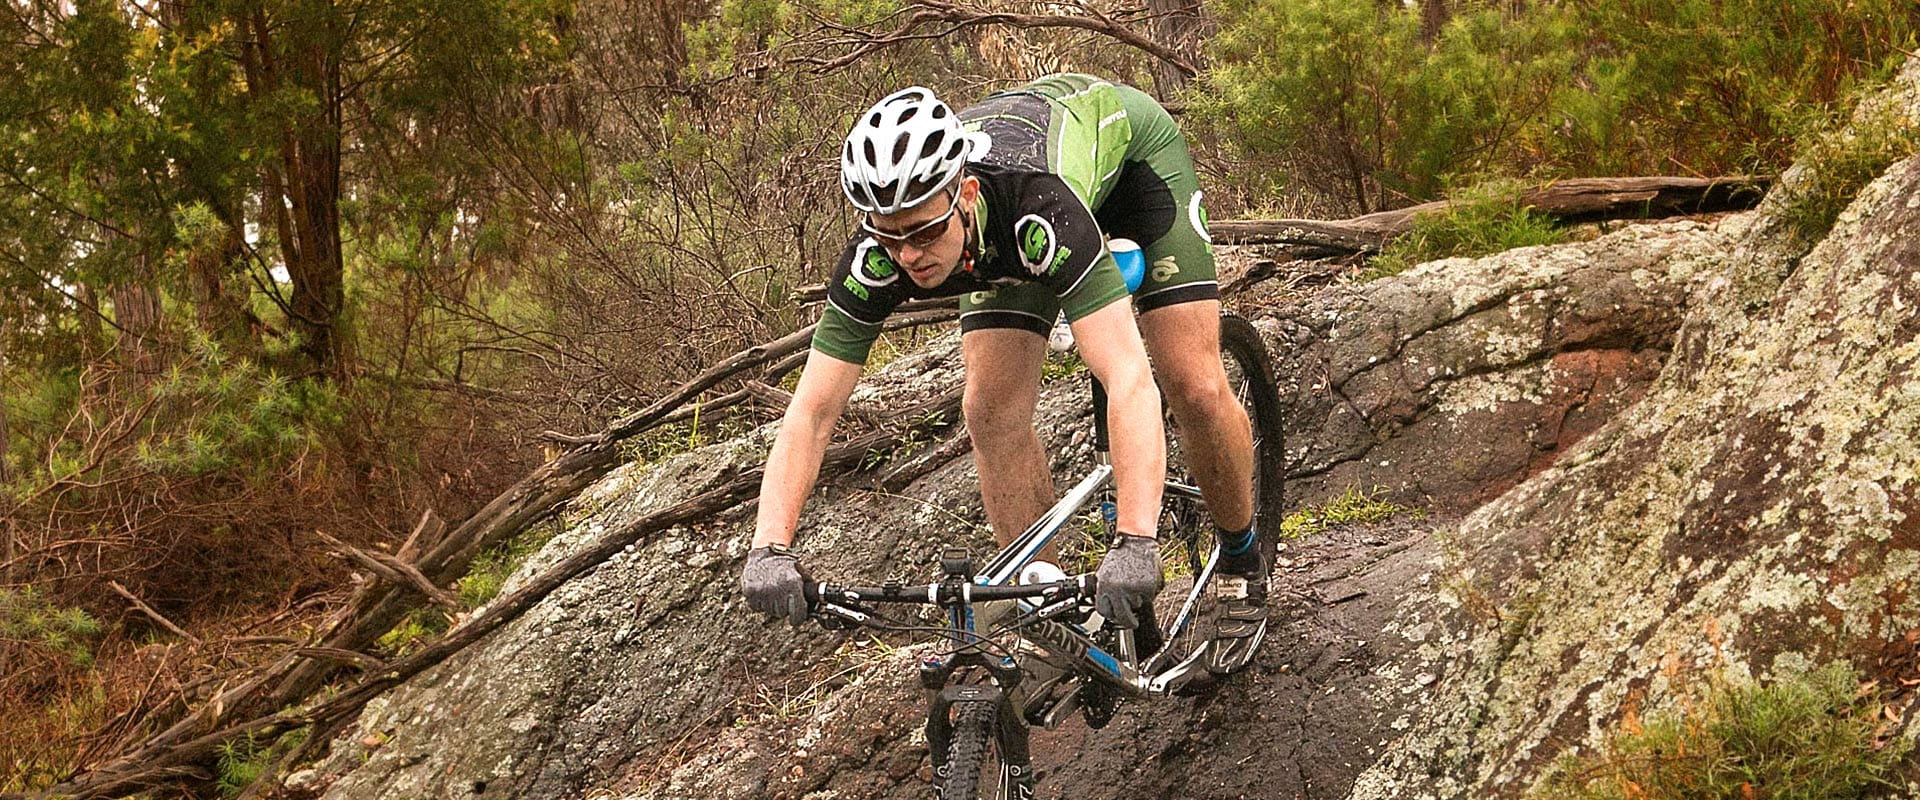 A person rides a mountain bike down a rocky outcrop in a rugged bushland.